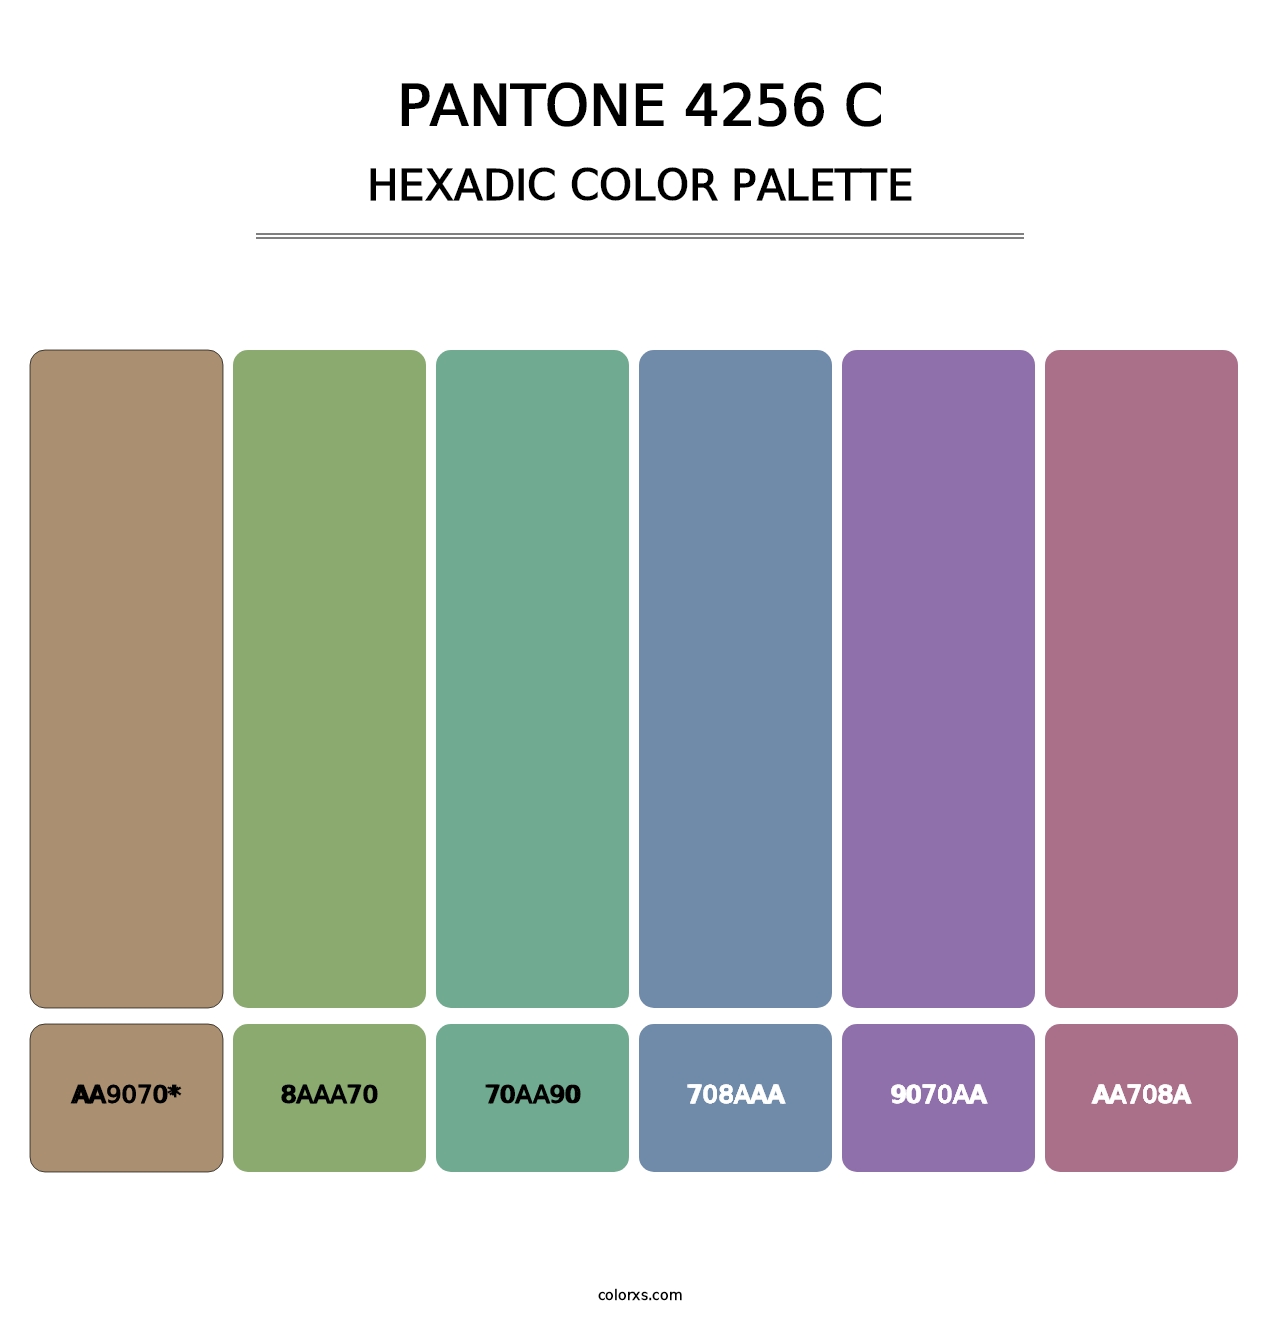 PANTONE 4256 C - Hexadic Color Palette